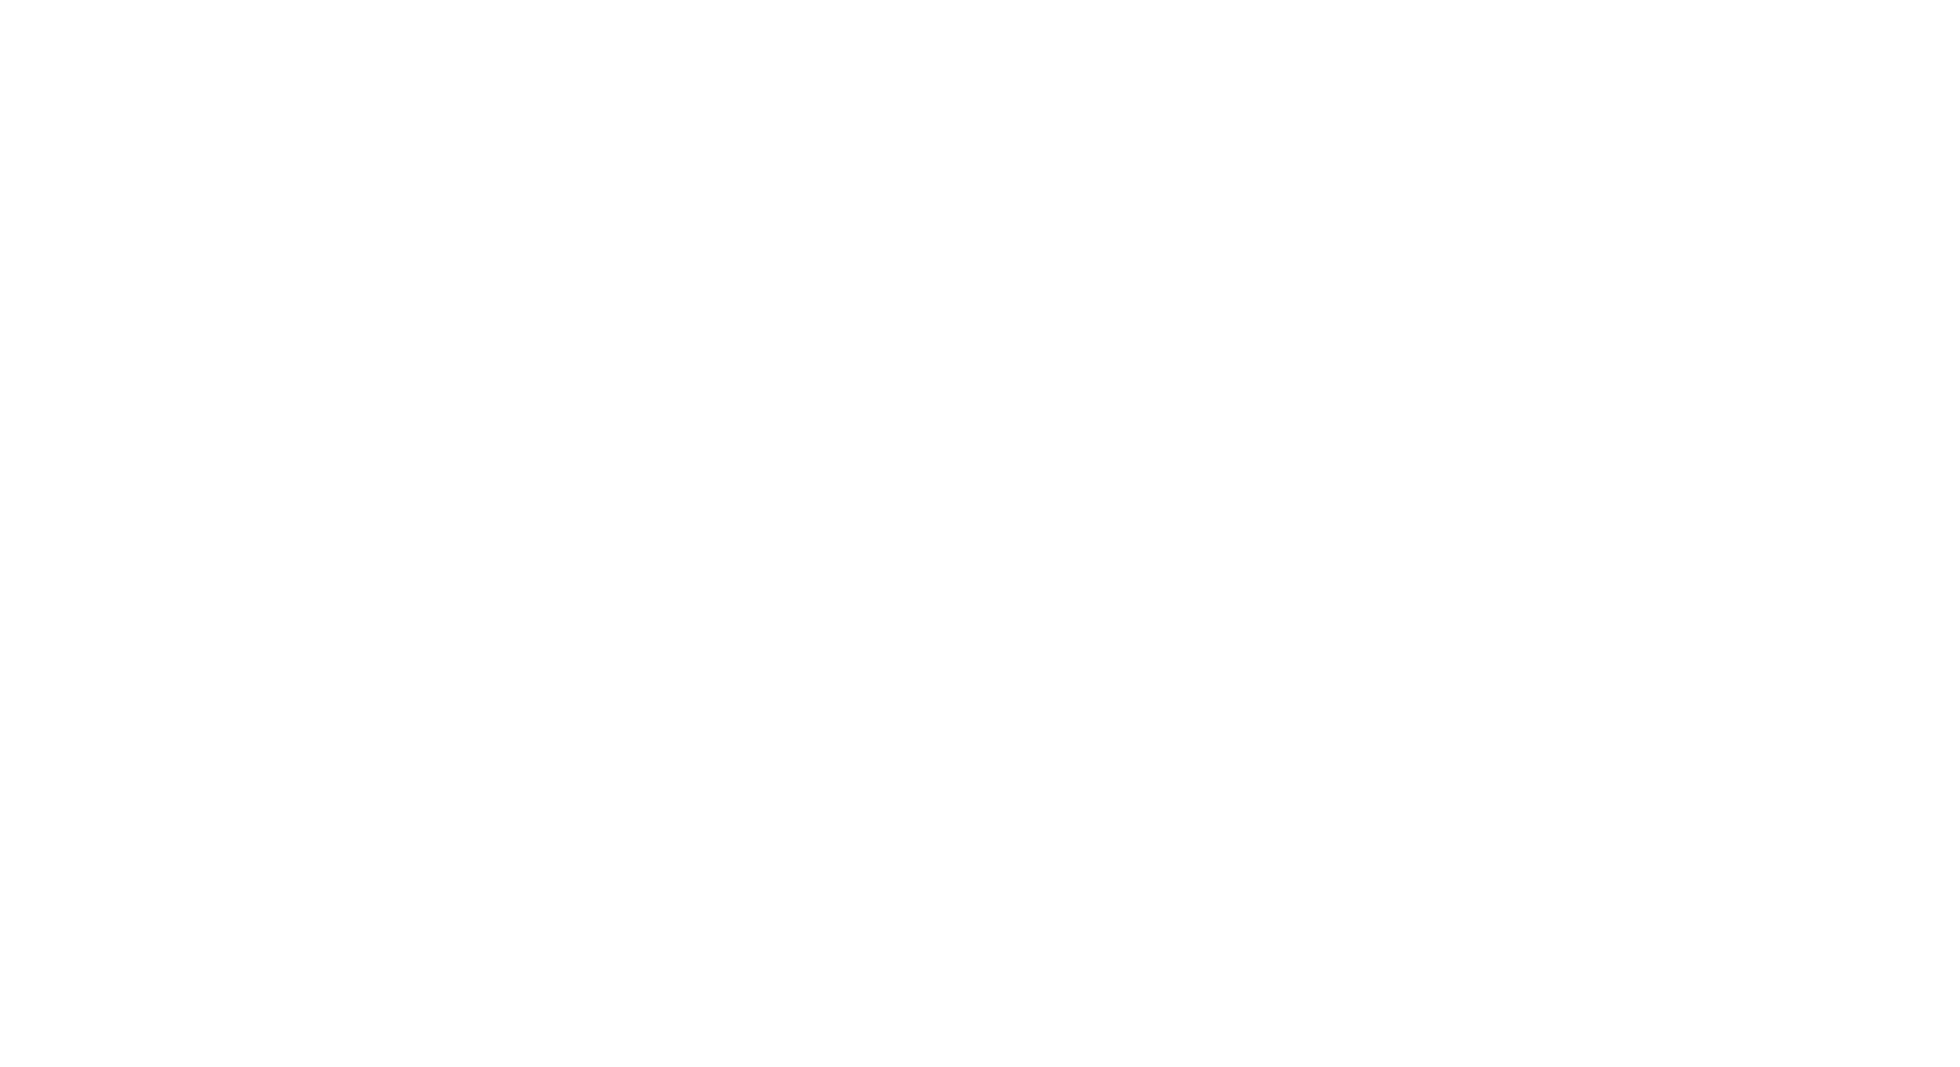 Covenant logo